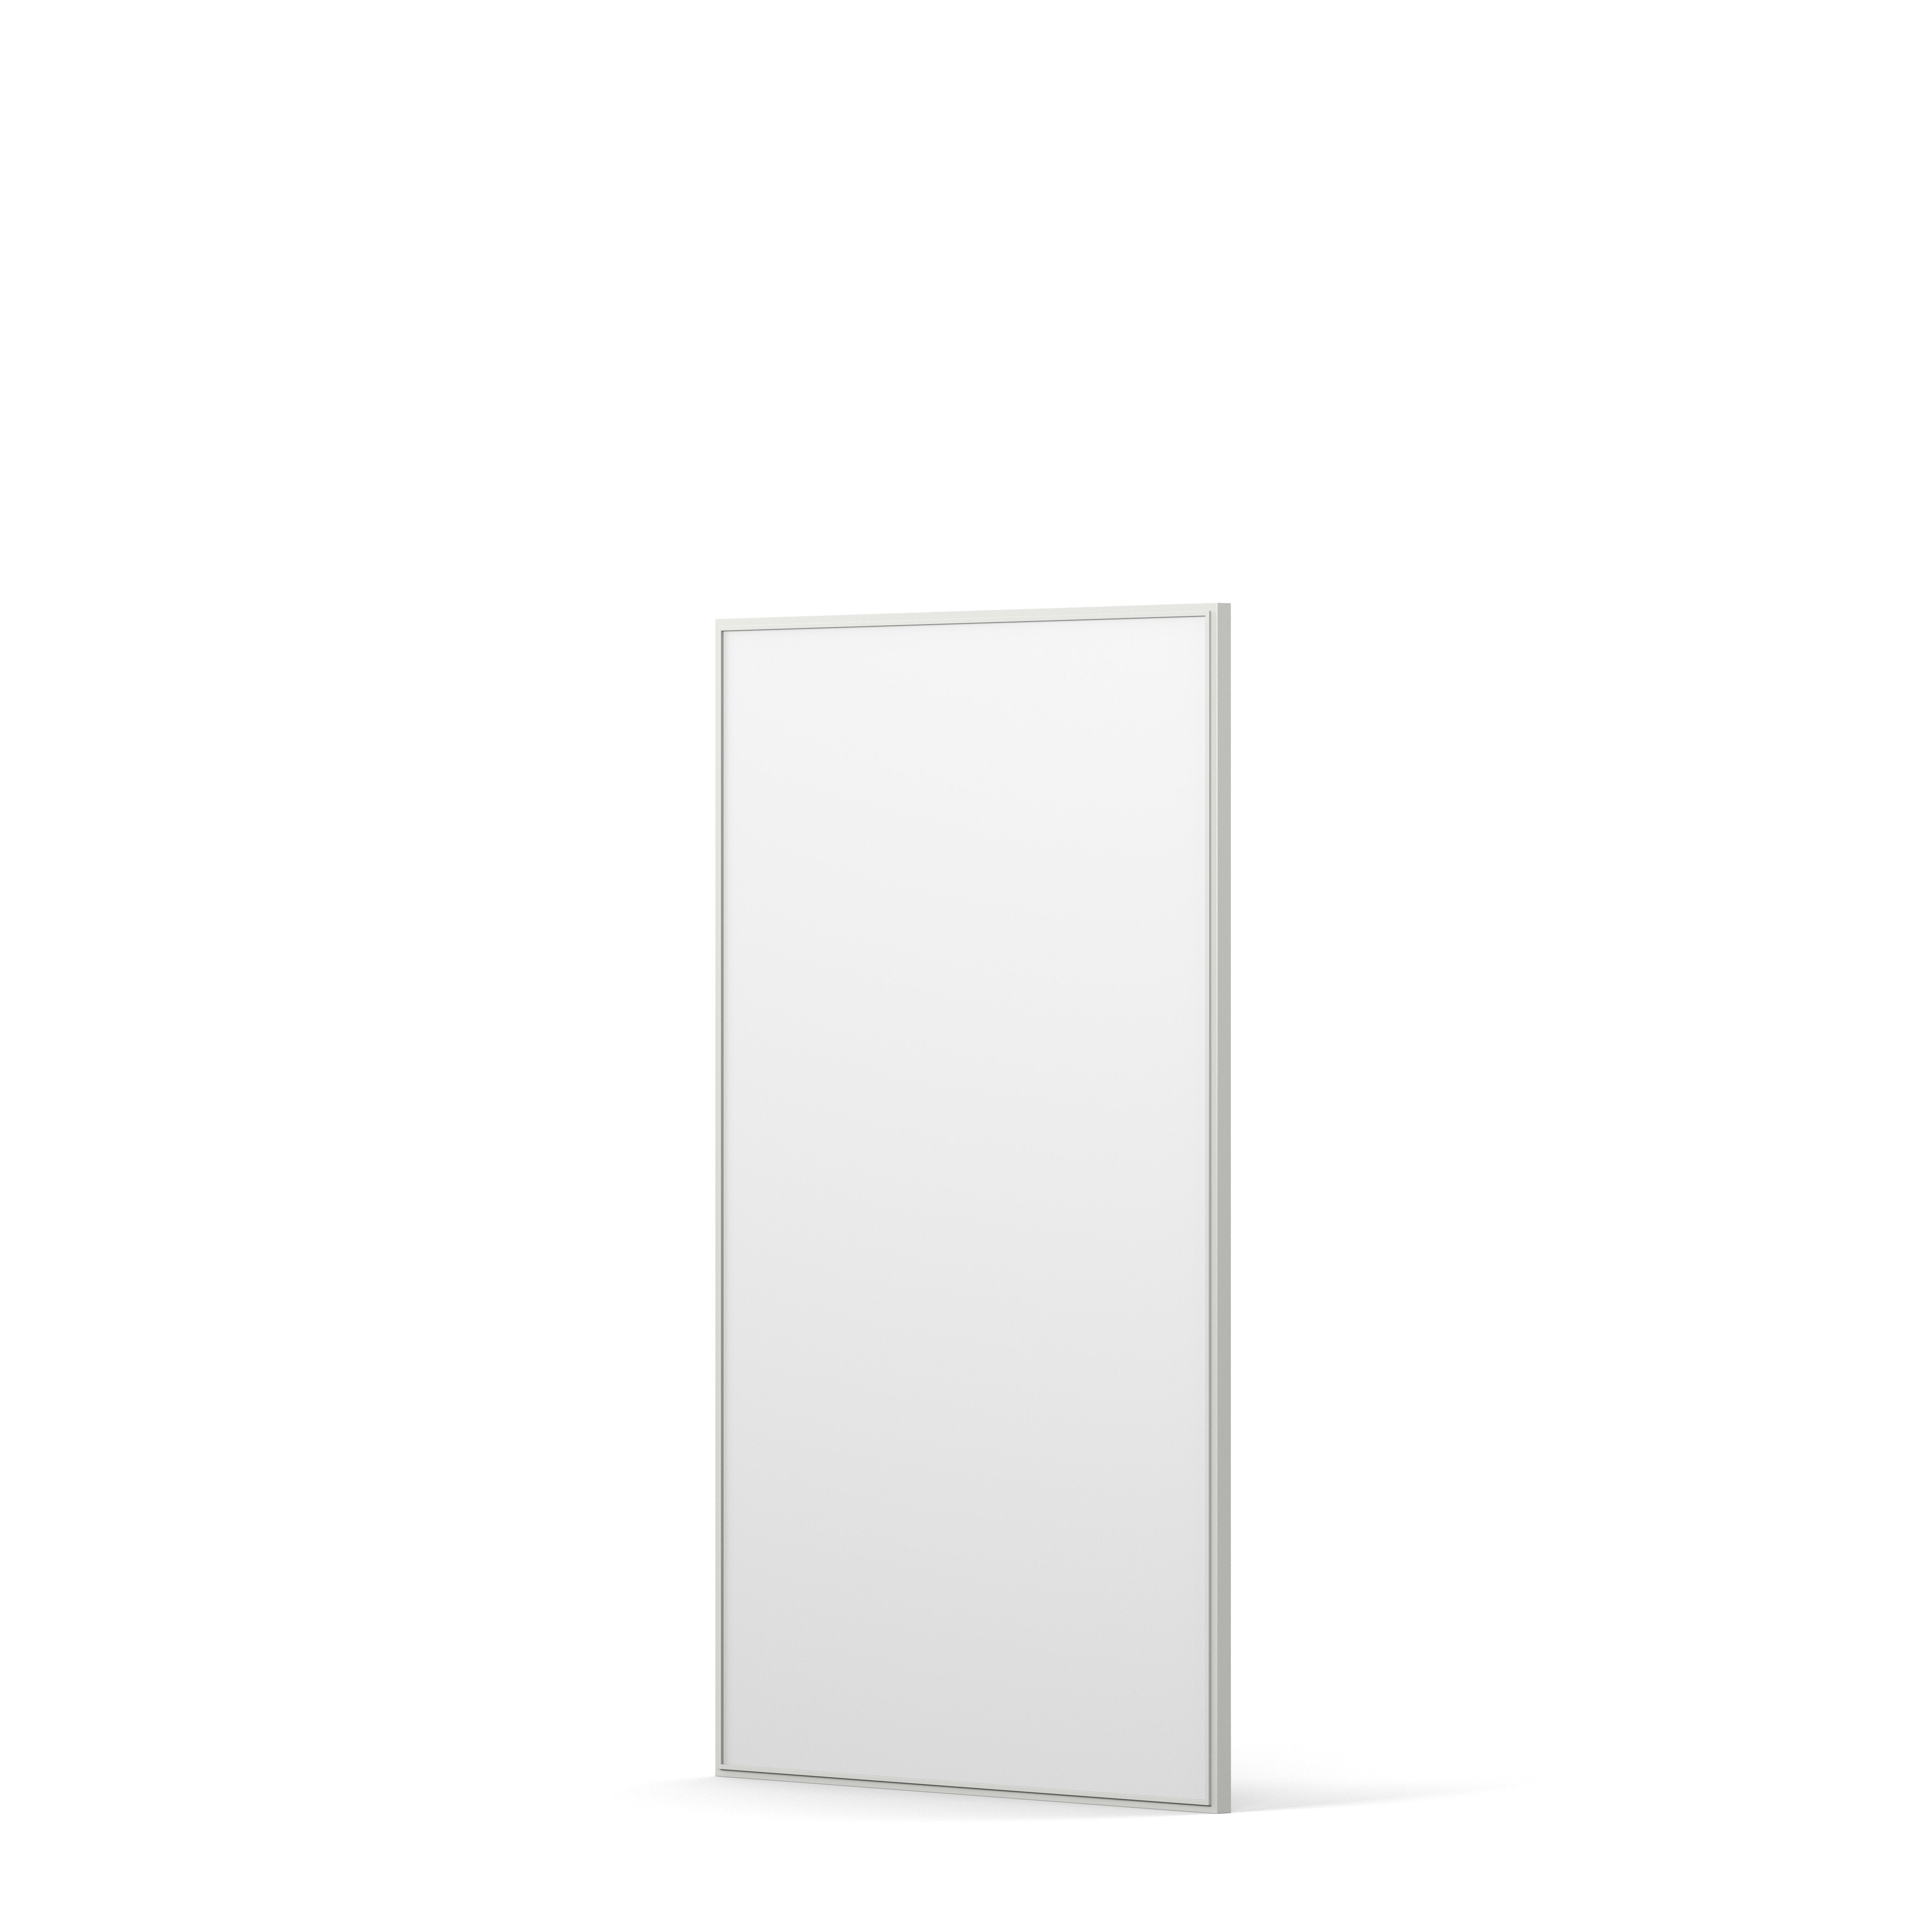 Englesson Cube Spegel Rektangulär #Variant_Edge White 